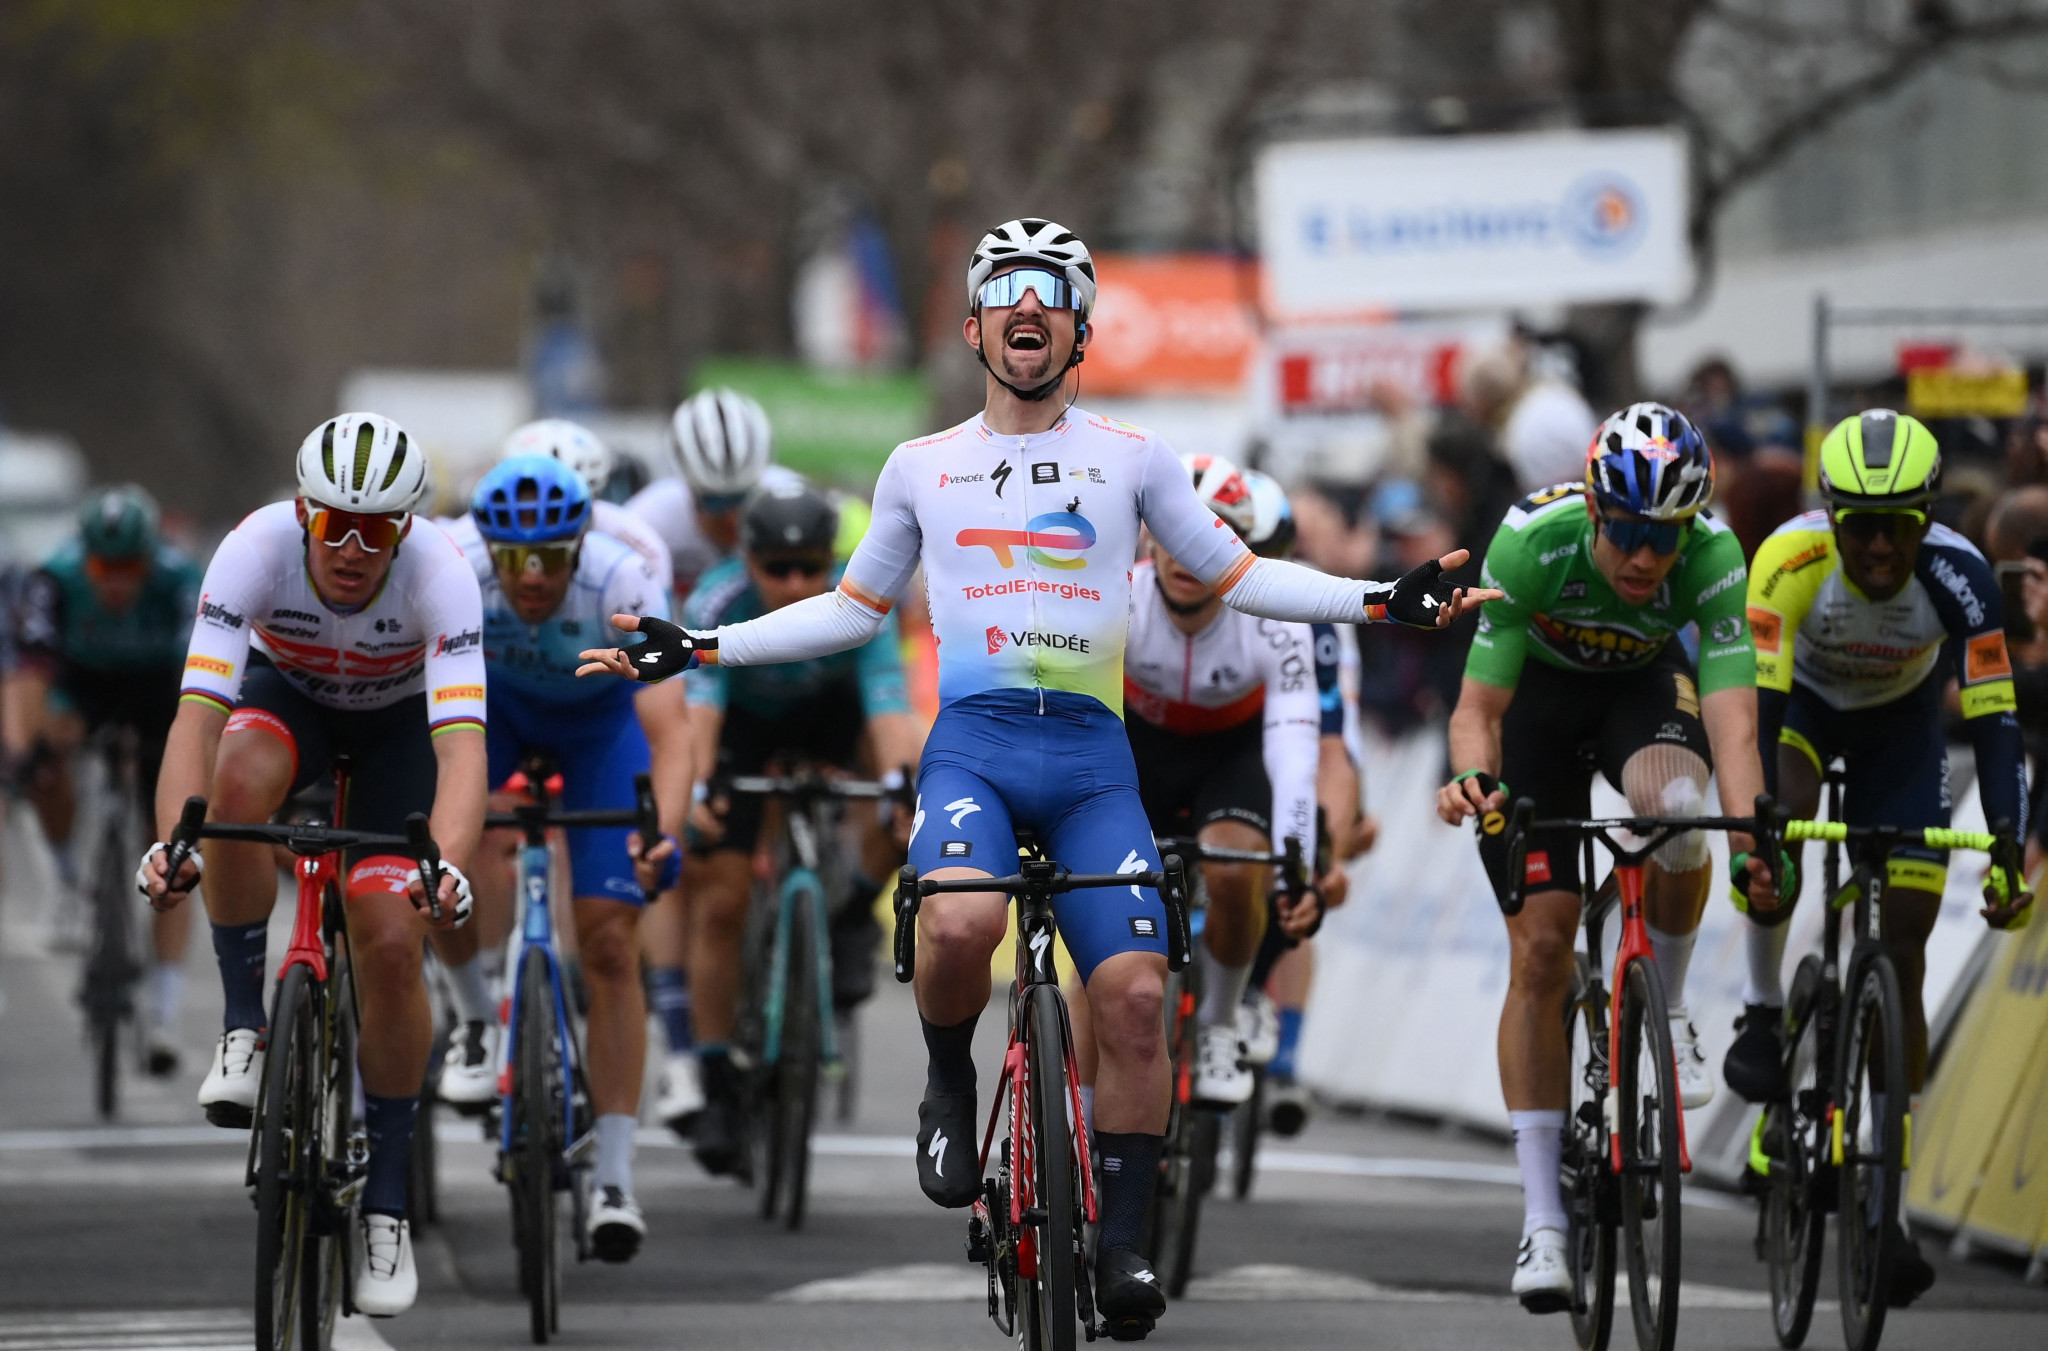 Burgaudeau breaks clear to earn narrow win on stage six of Paris-Nice